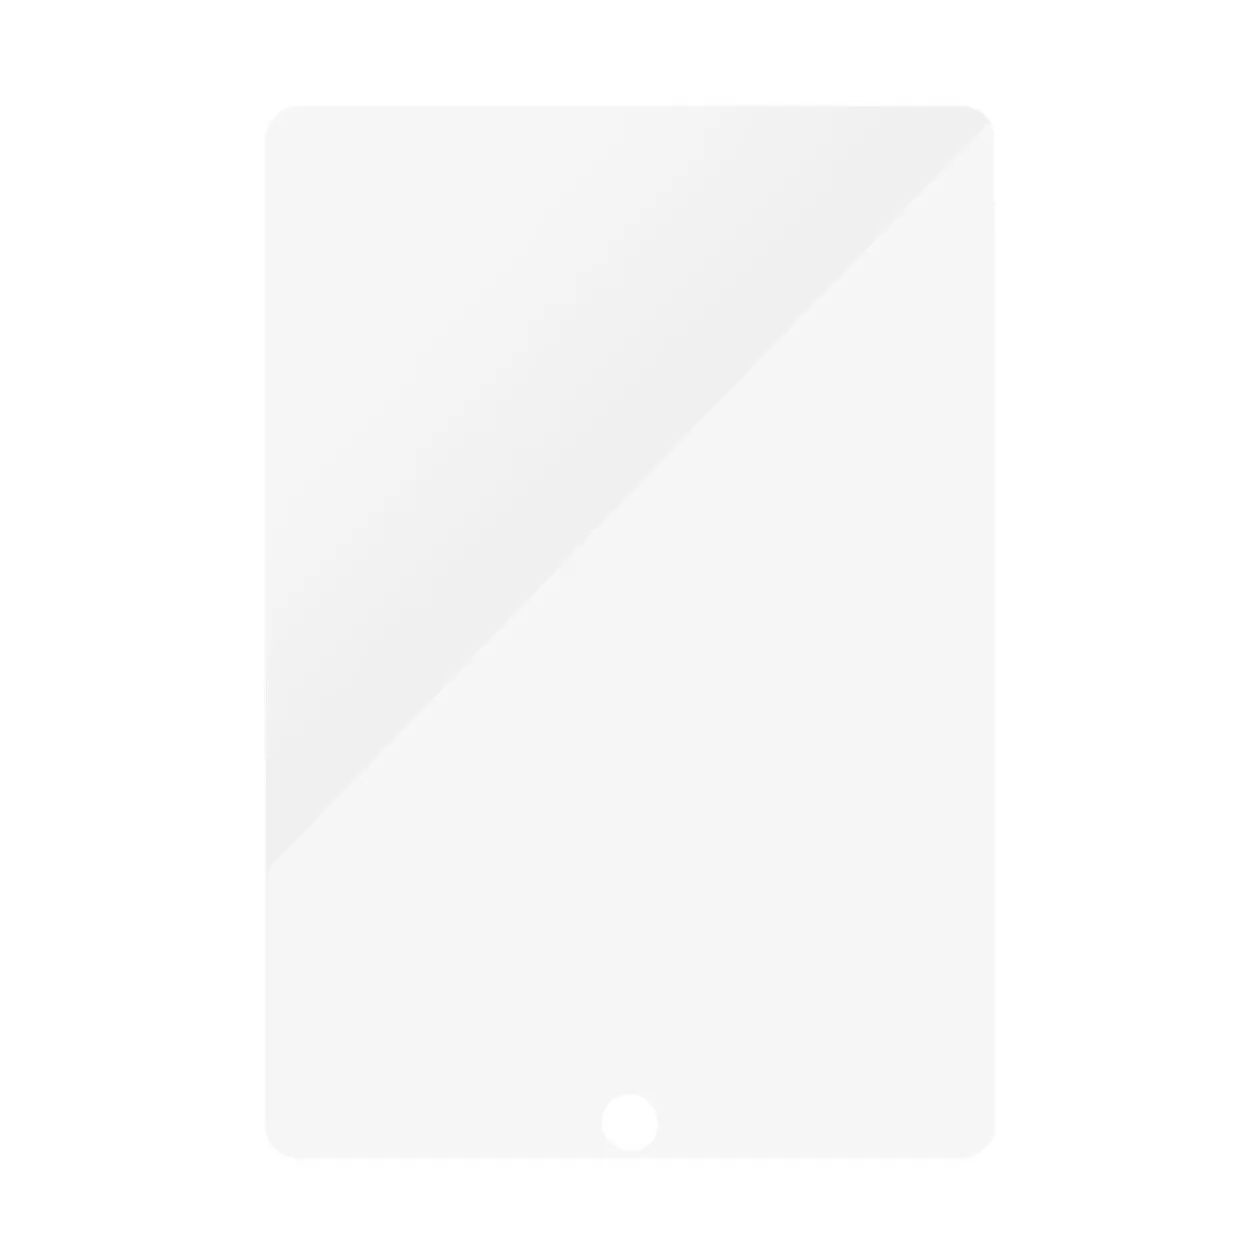 PanzerGlass iPad 10.2